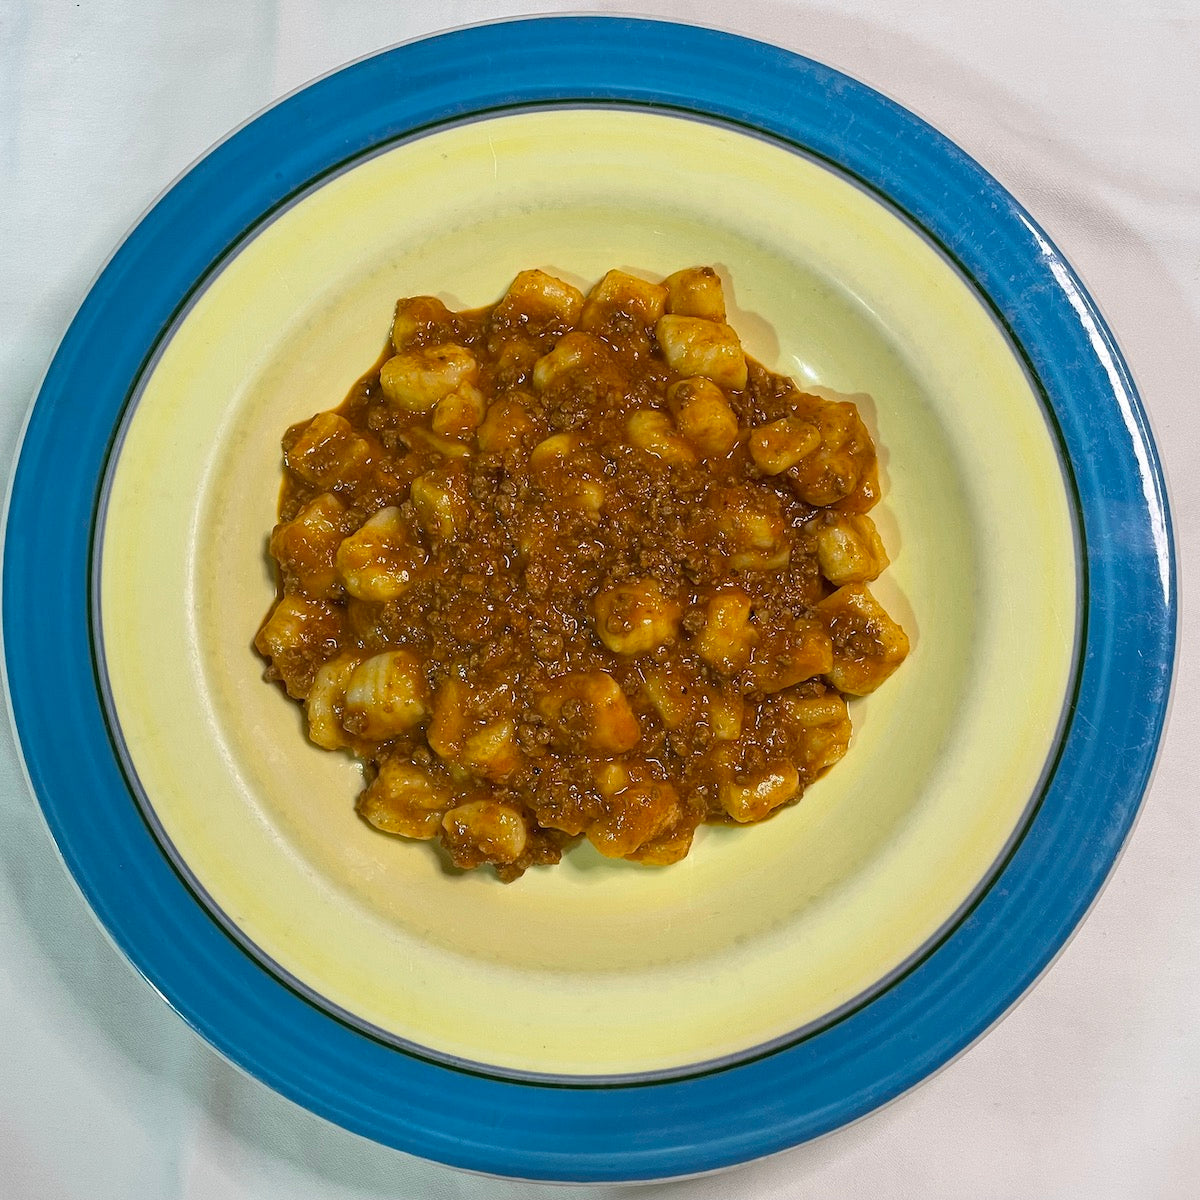 Homemade Potato "Gnocchi" with Beef Bolognese Ragù